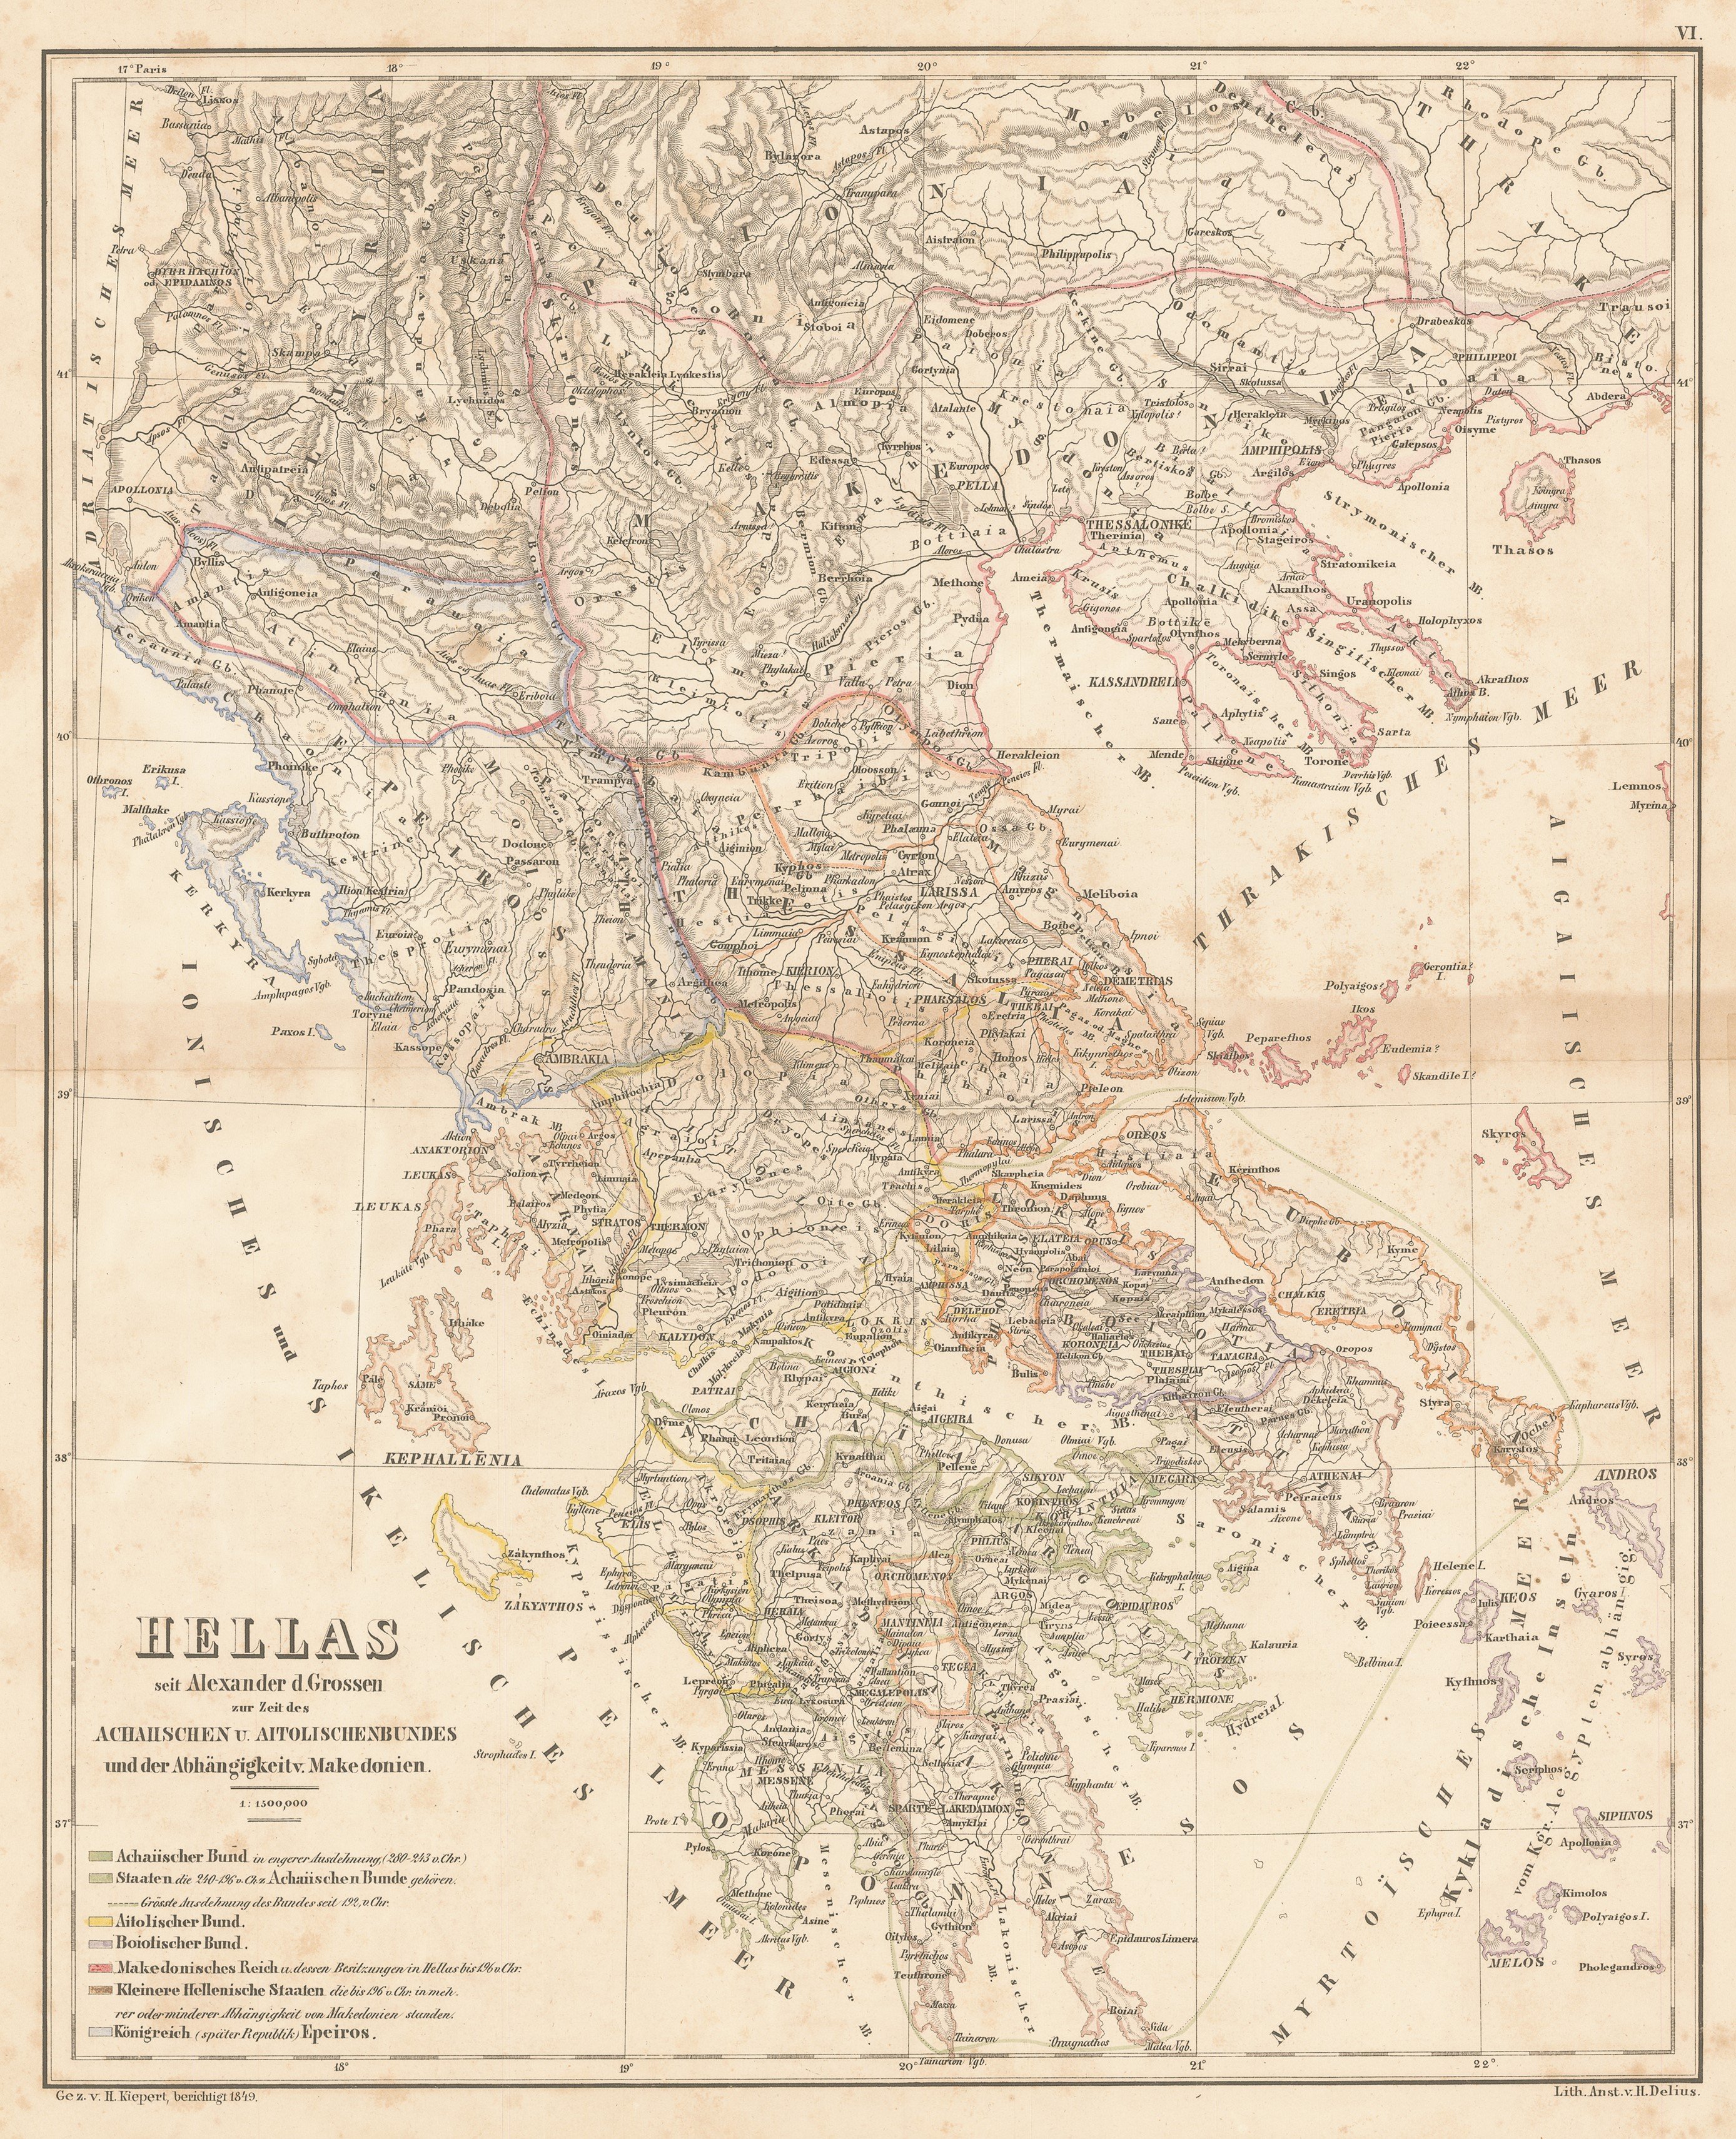  HEINRICH KIEPERT. ΒΕΡΟΛΙΝΟ 1849.Χάρτης της Ελλάδος κατά την εποχή του Μεγάλου Αλεξάνδρου. Ο μεγάλος χαρτογράφος ξεχωρίζει τα όρια της ελληνικής Μακεδονίας από την Παιονία, όπου ζούσαν θρακικοί λαοί, οι οποίοι δεν μιλούσαν την αιολοδωρική διάλεκτο των Μακεδόνων.